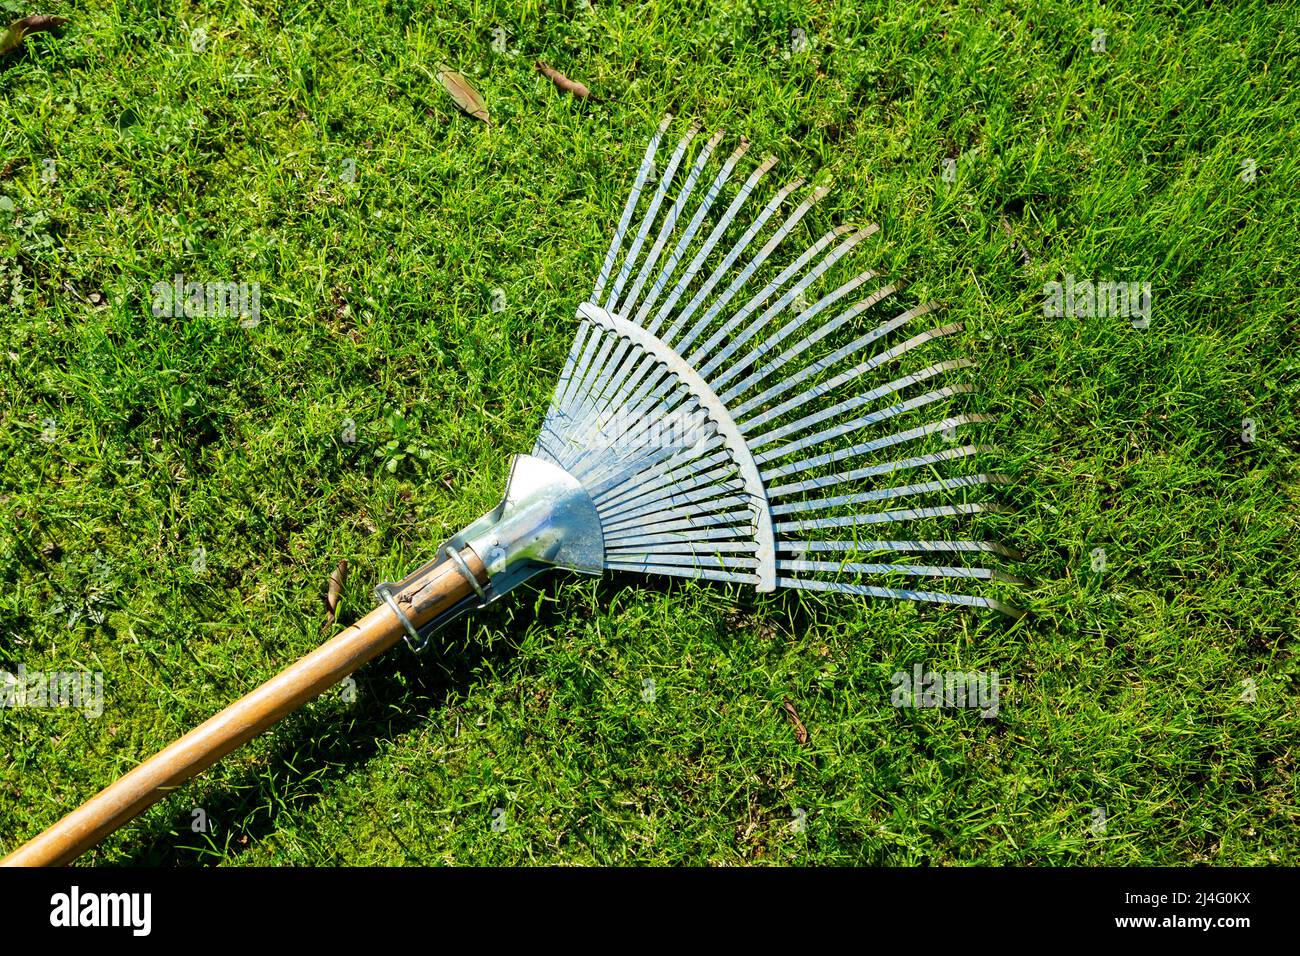 Garden rake on the lawn. Garden rake with wooden handle made of bright steel. Spring, gardening, farming concept. Stock Photo